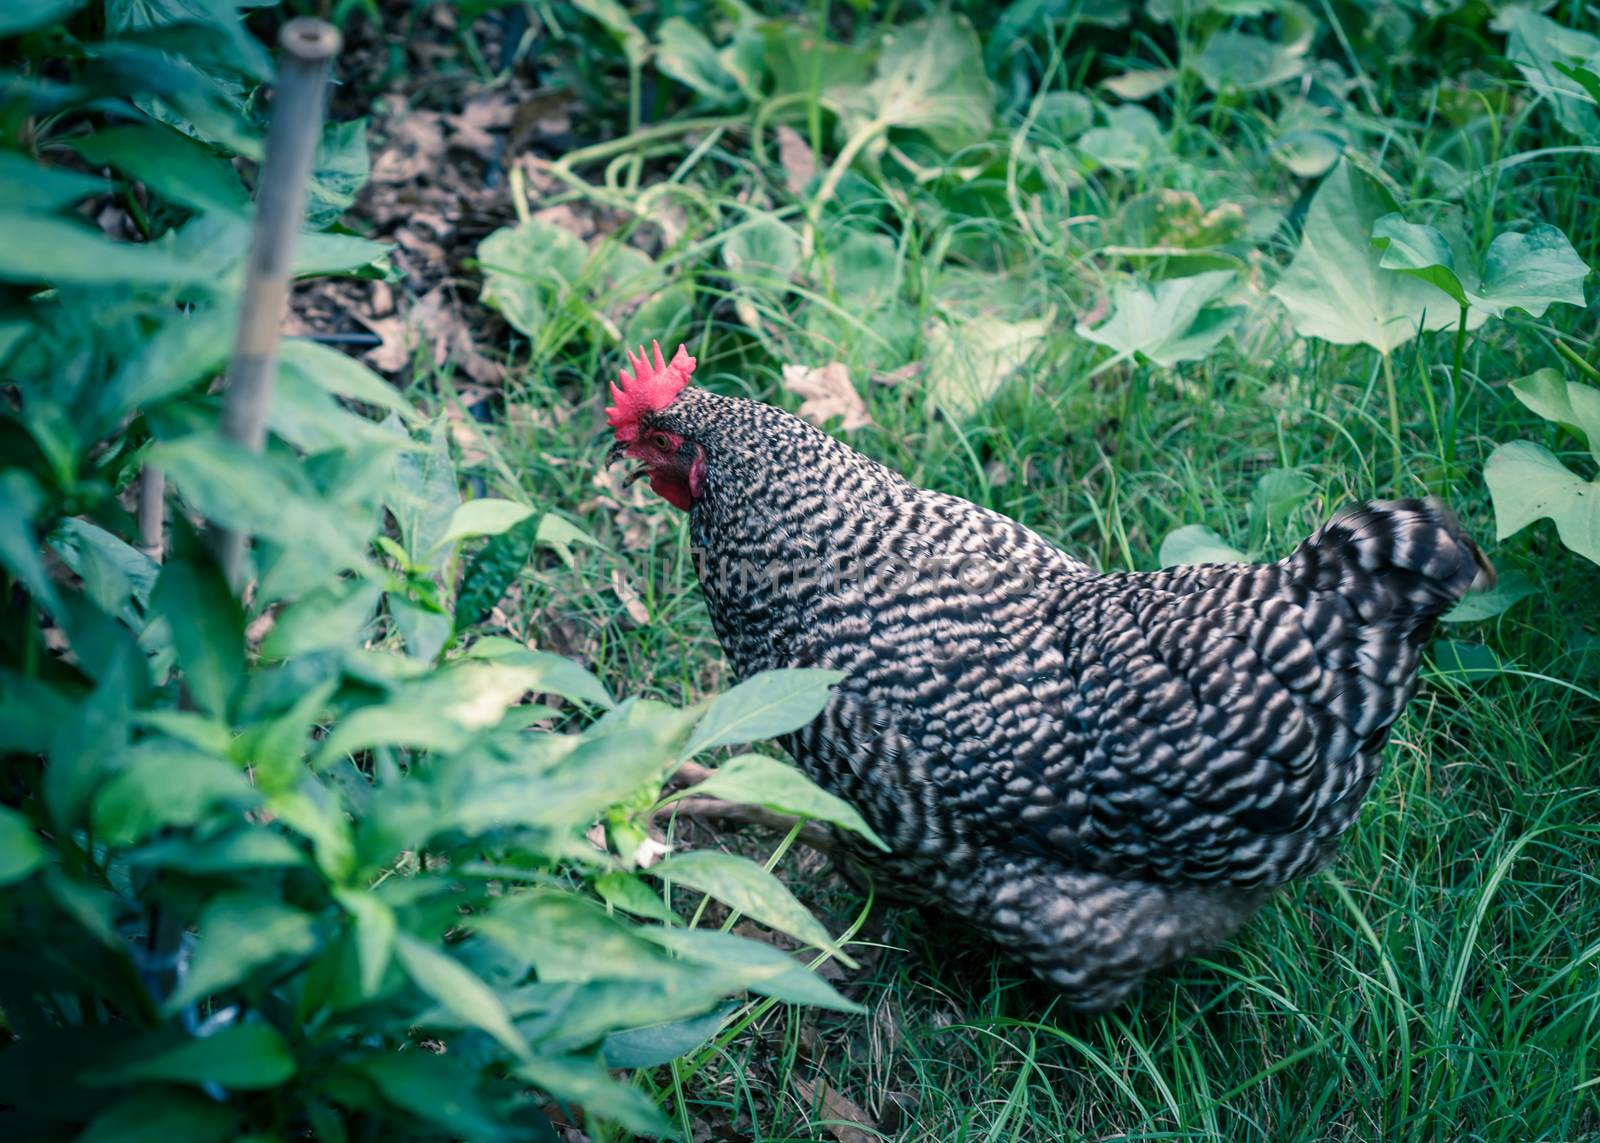 Shallow DOF free range Marans breed laying egg hen chicken at organic vegetable garden near Dallas, Texas, USA by trongnguyen